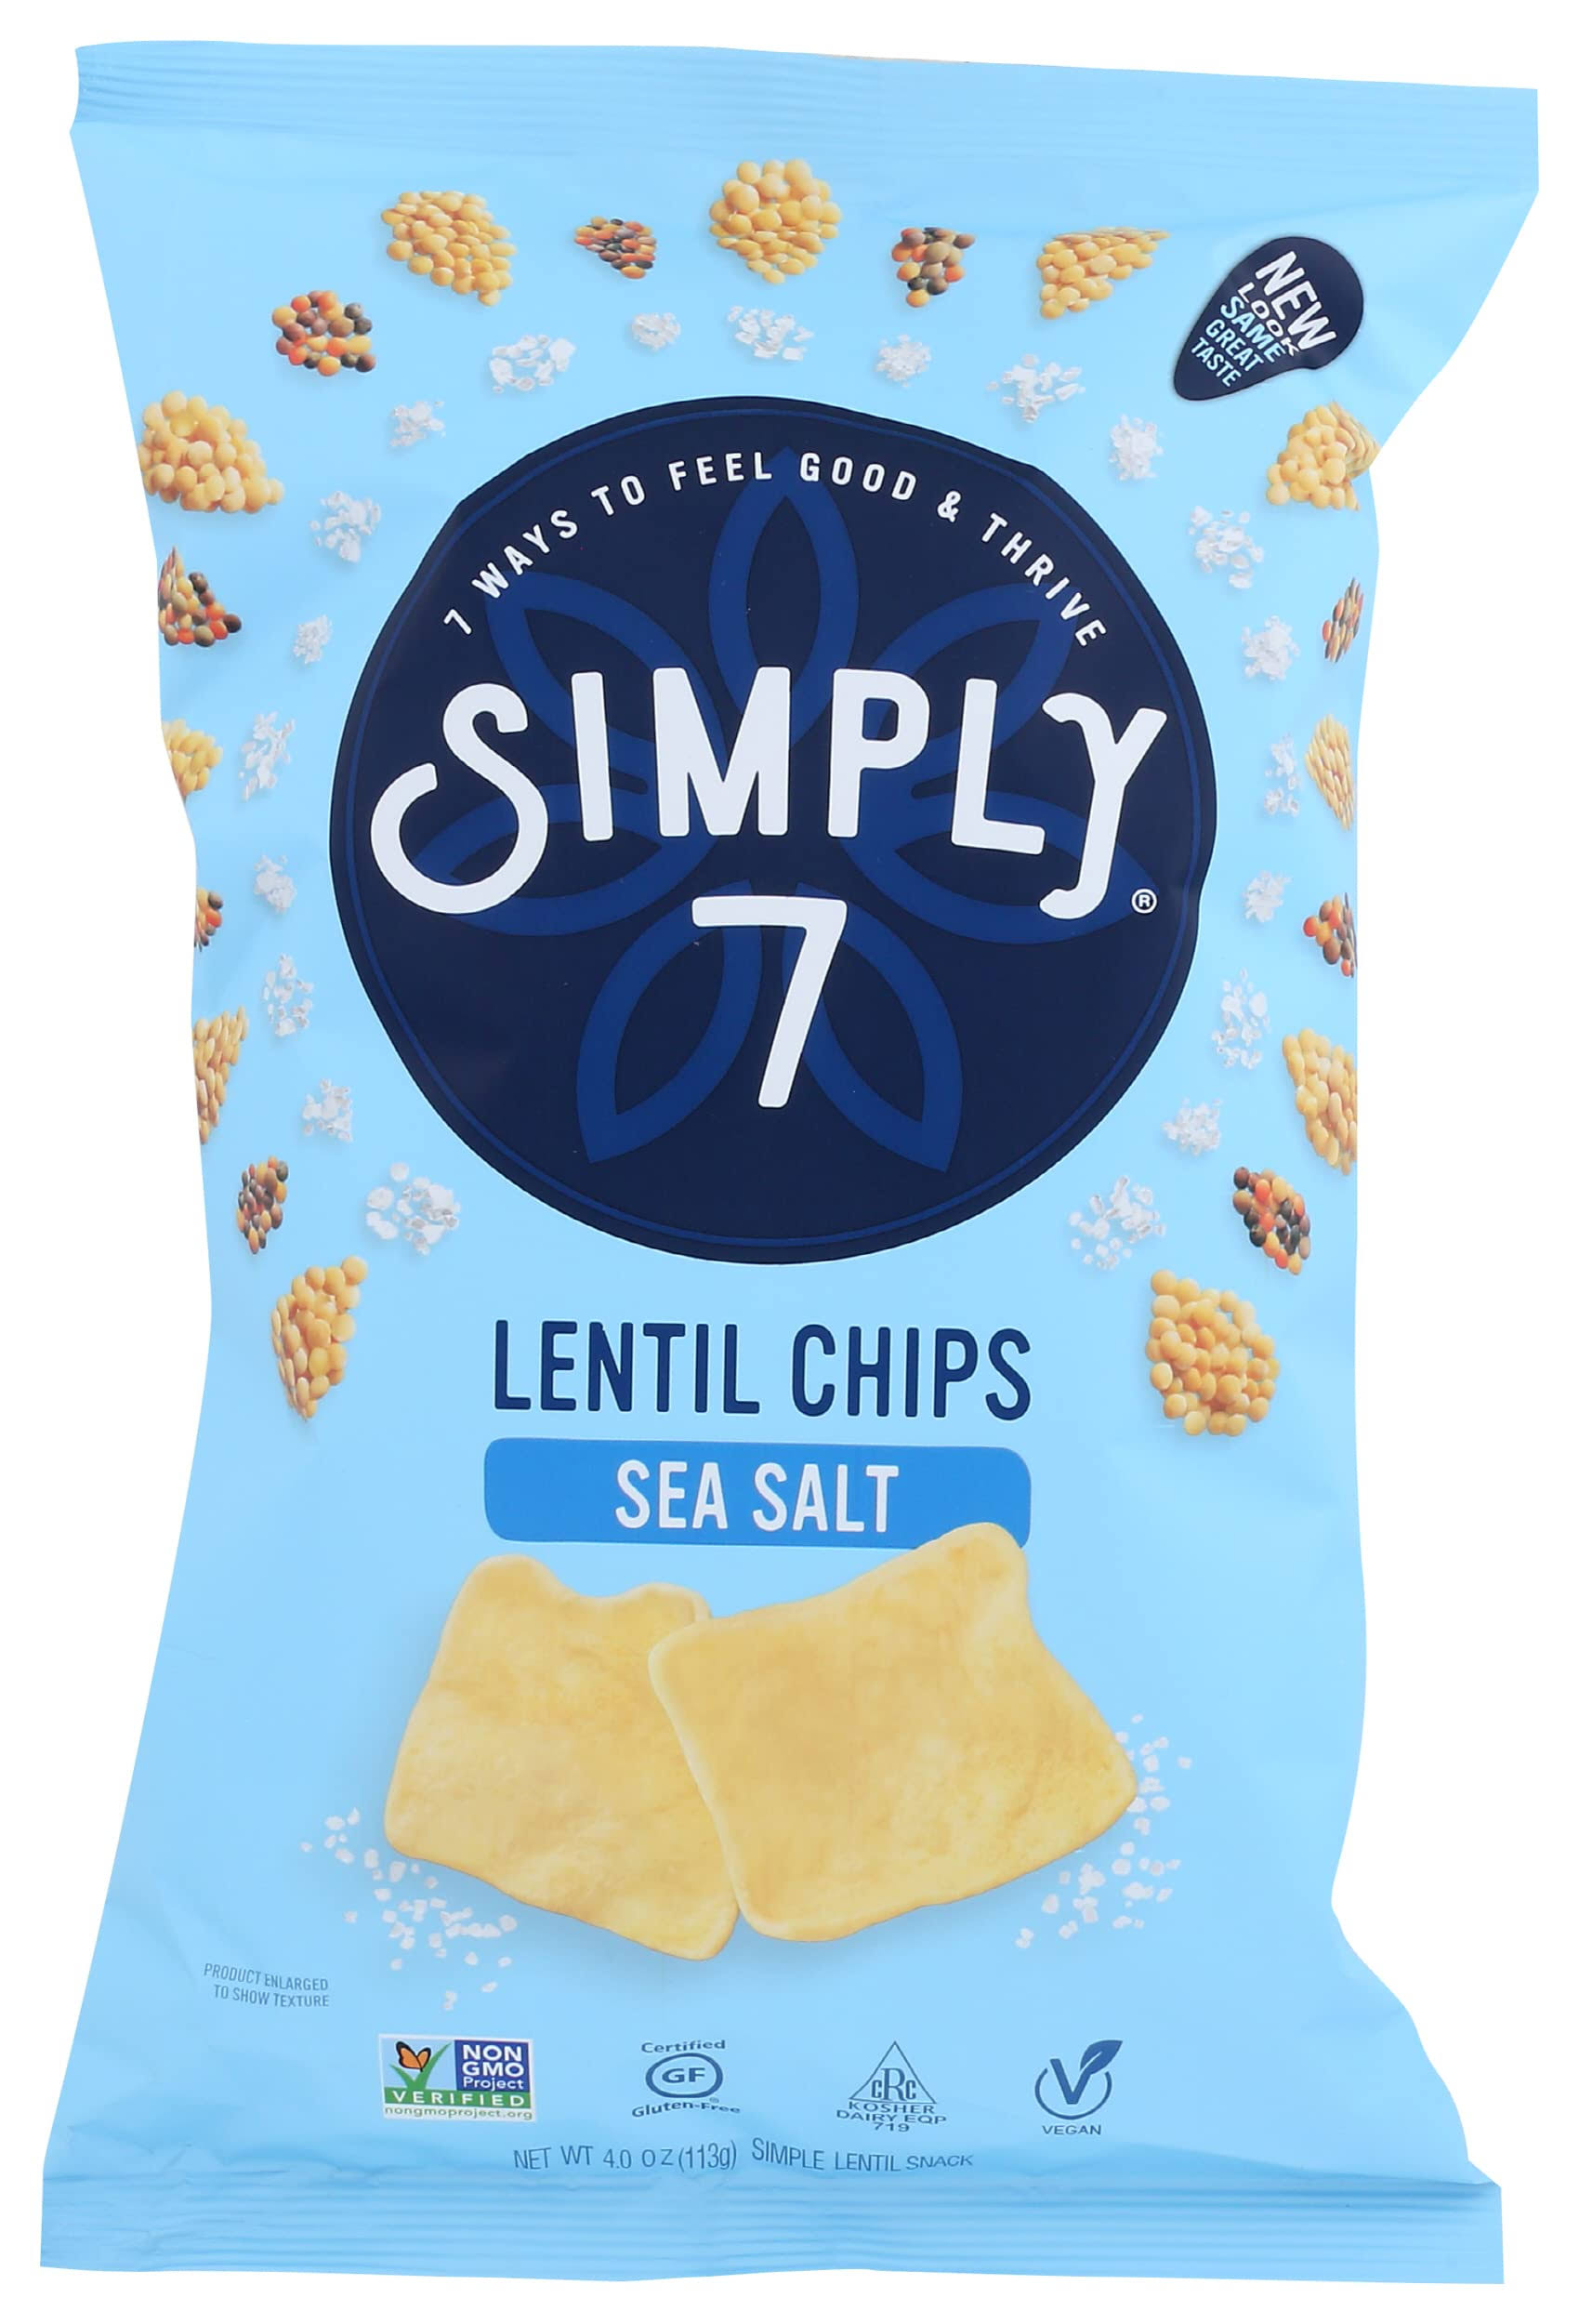 Simply 7 Lentil Chips - Sea Salt